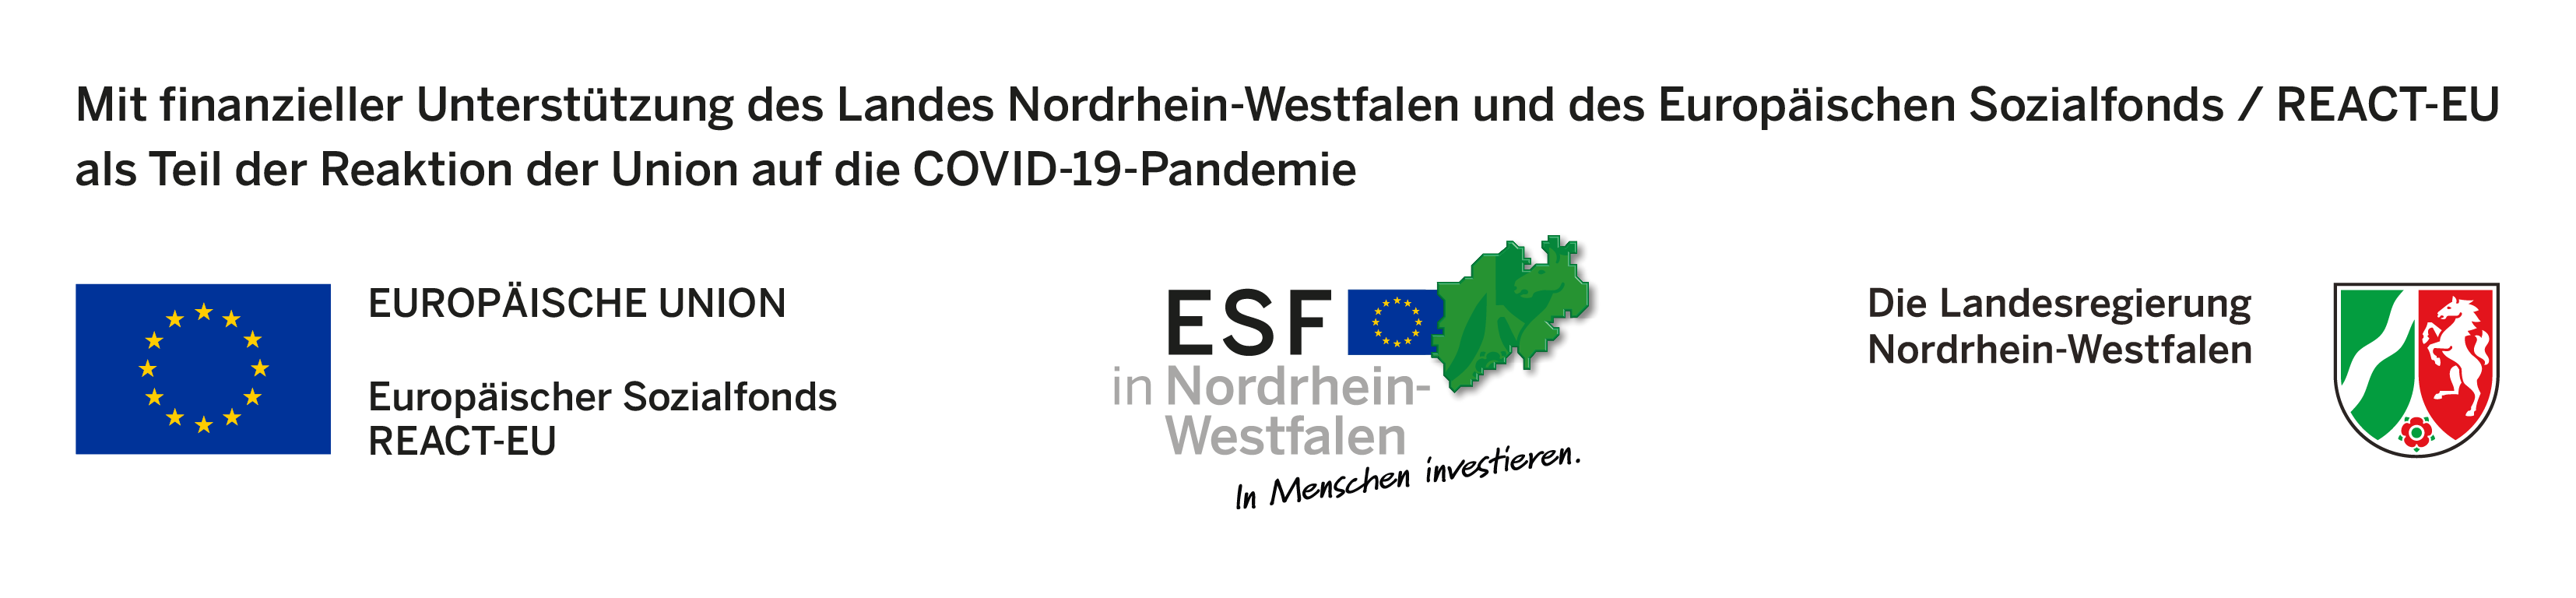 Förderlogos EU, ESF NRW, Landesregierung NRW